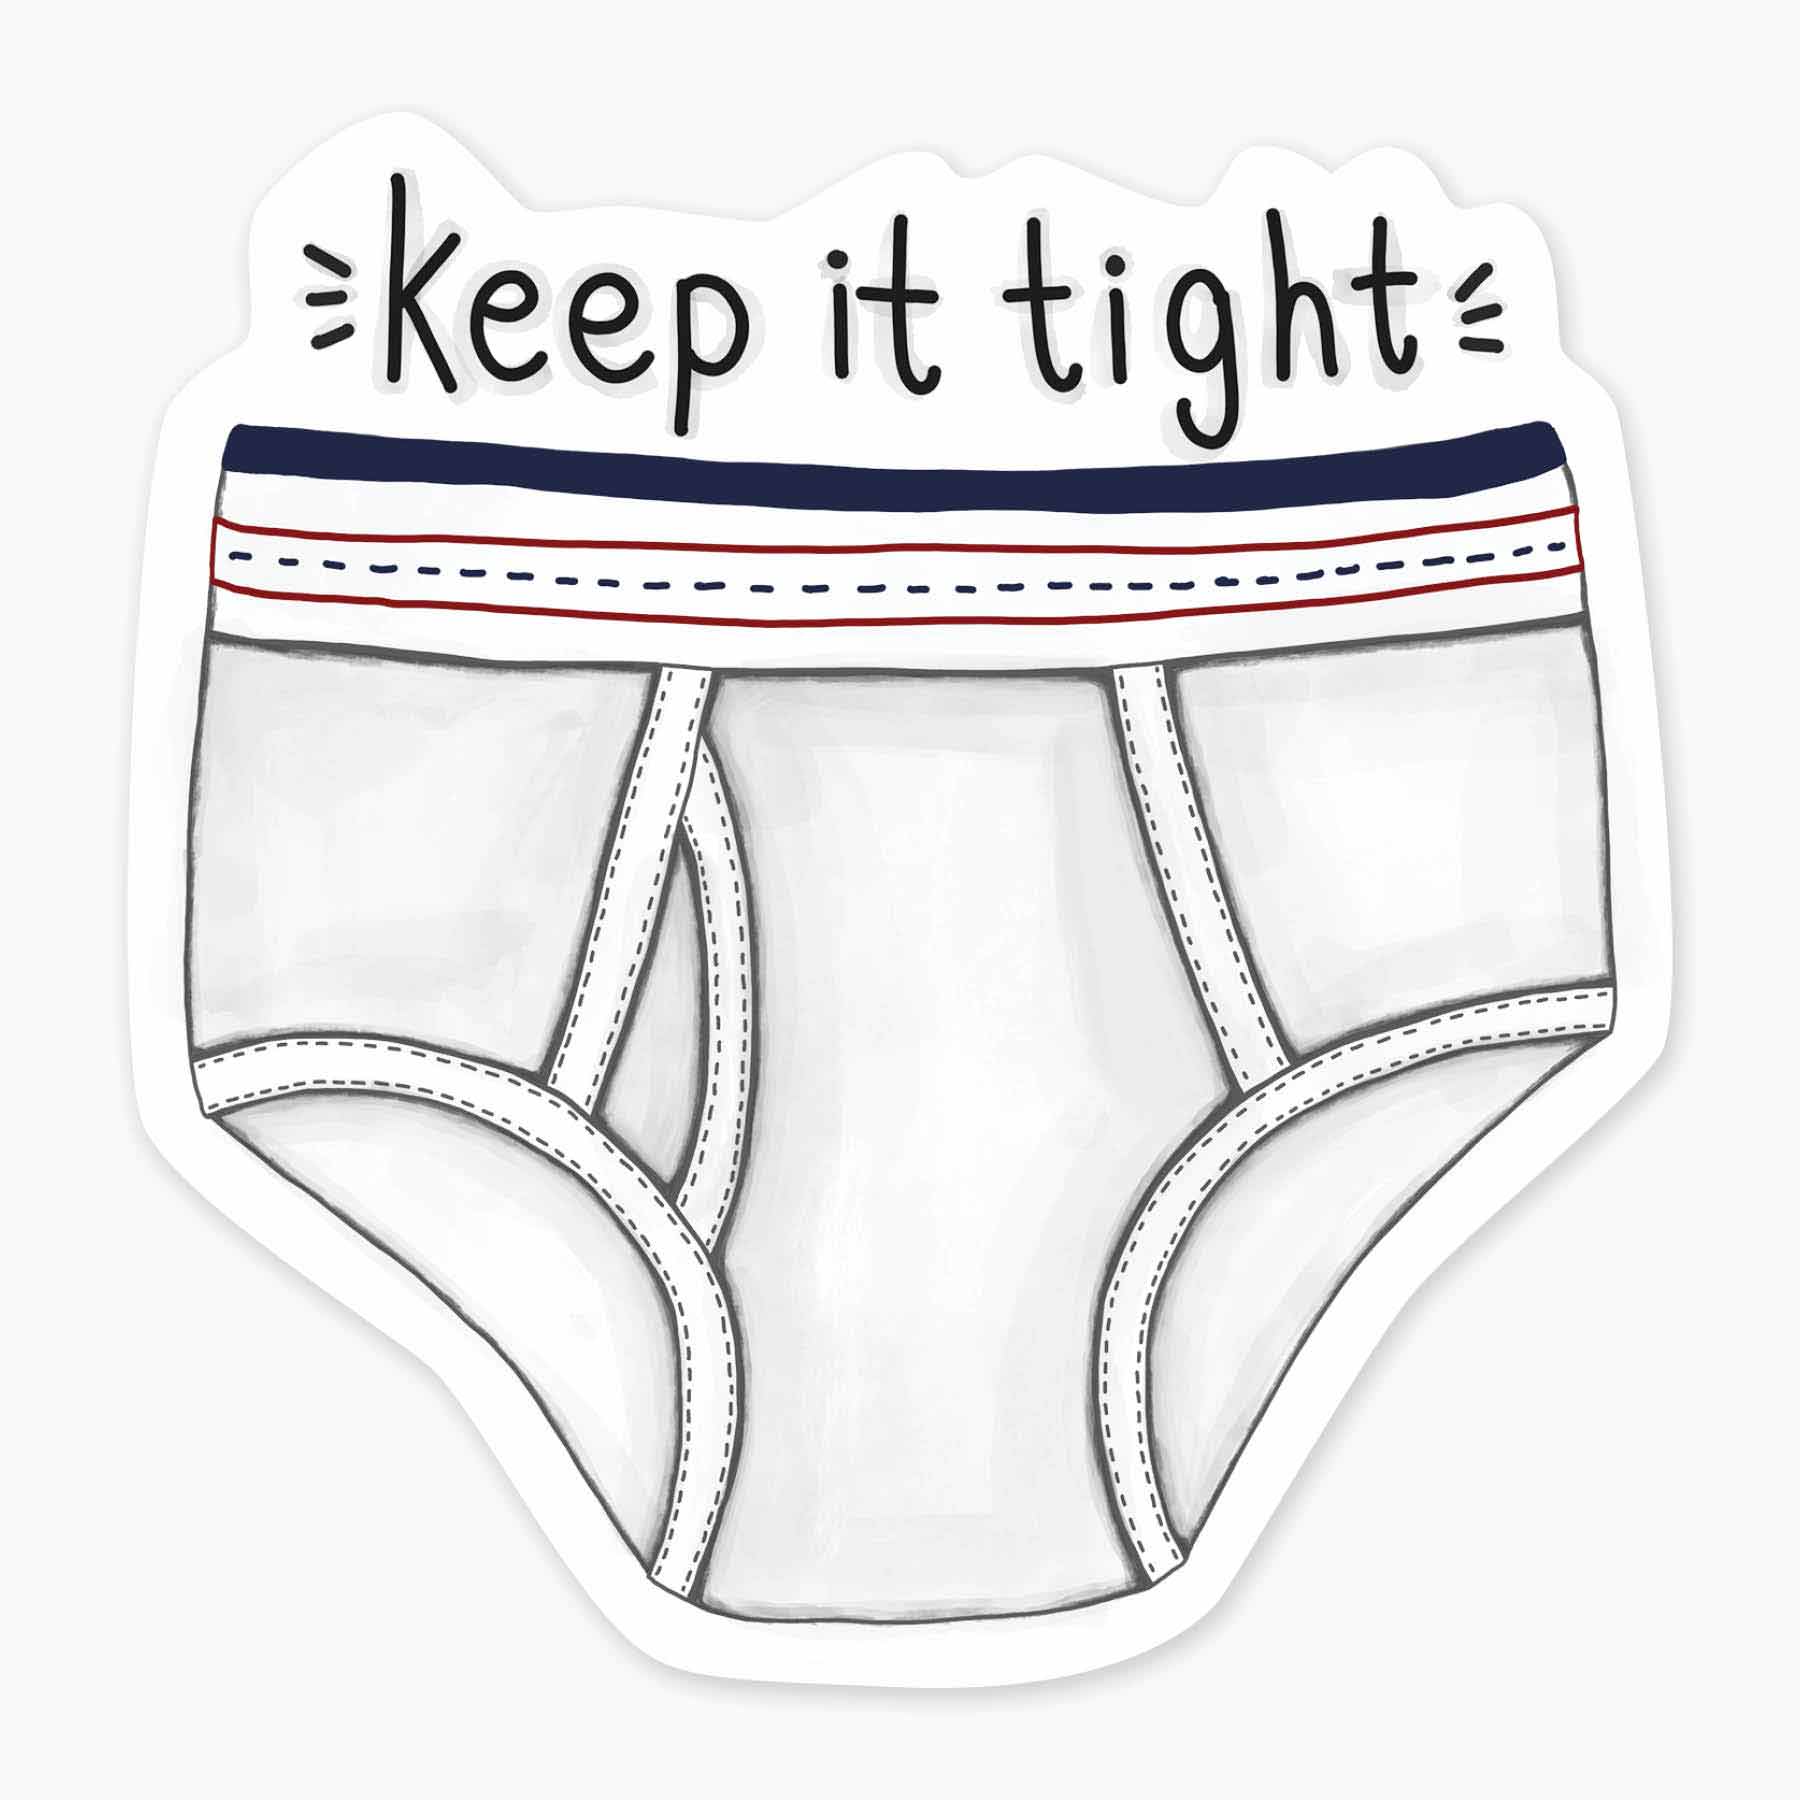 classic Tighty whities - Underwear - Sticker